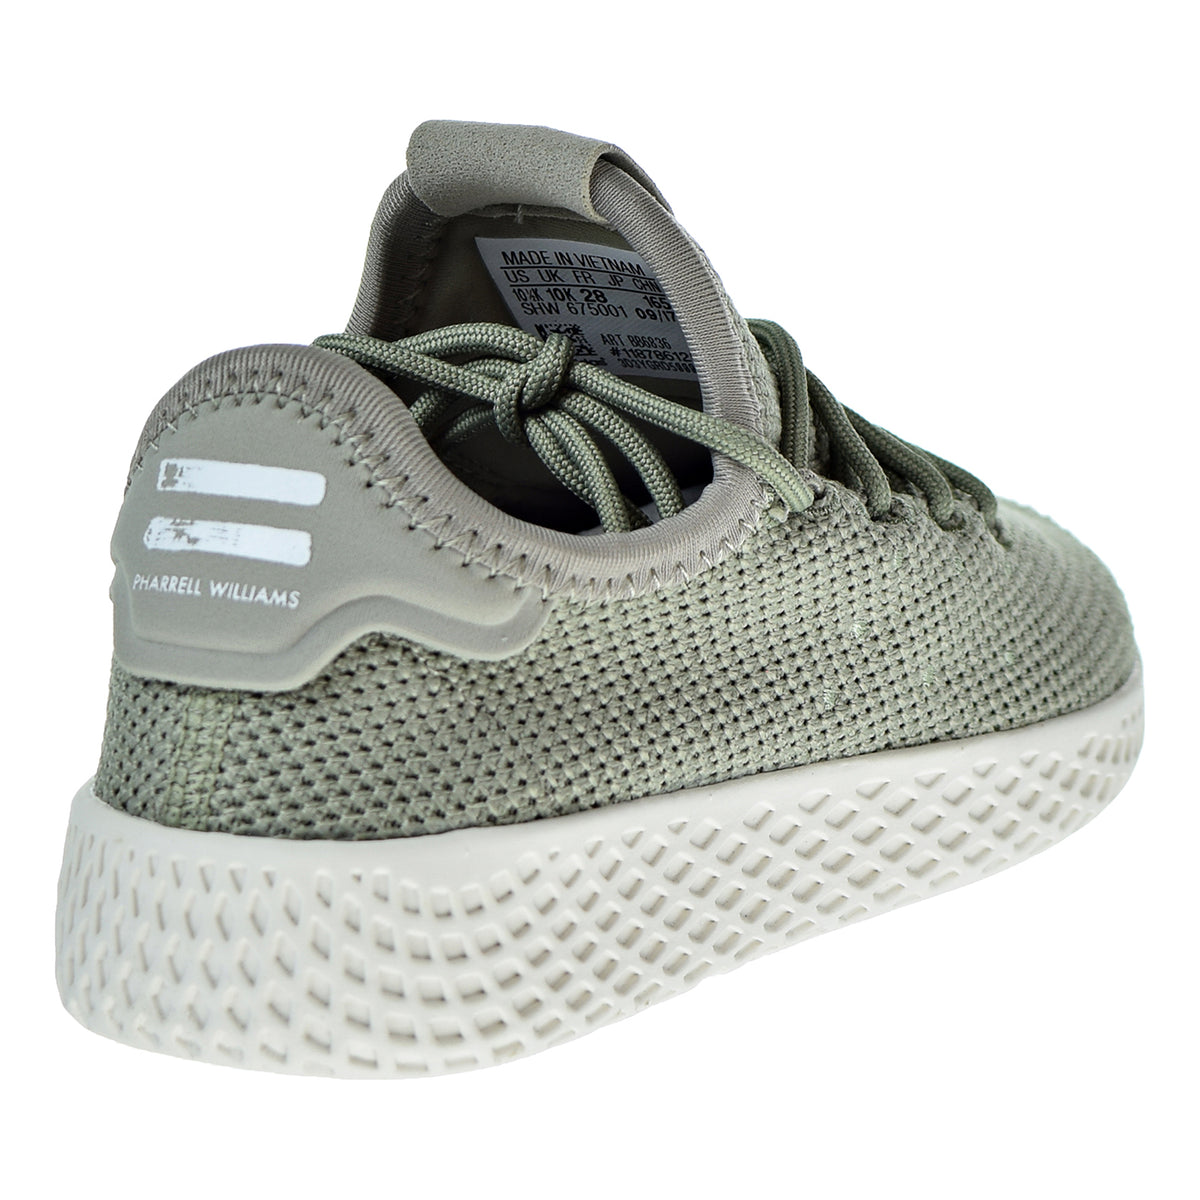 Adidas Originals PW Tennis Hu - Boys Preschool Shoes Carbon Size 3